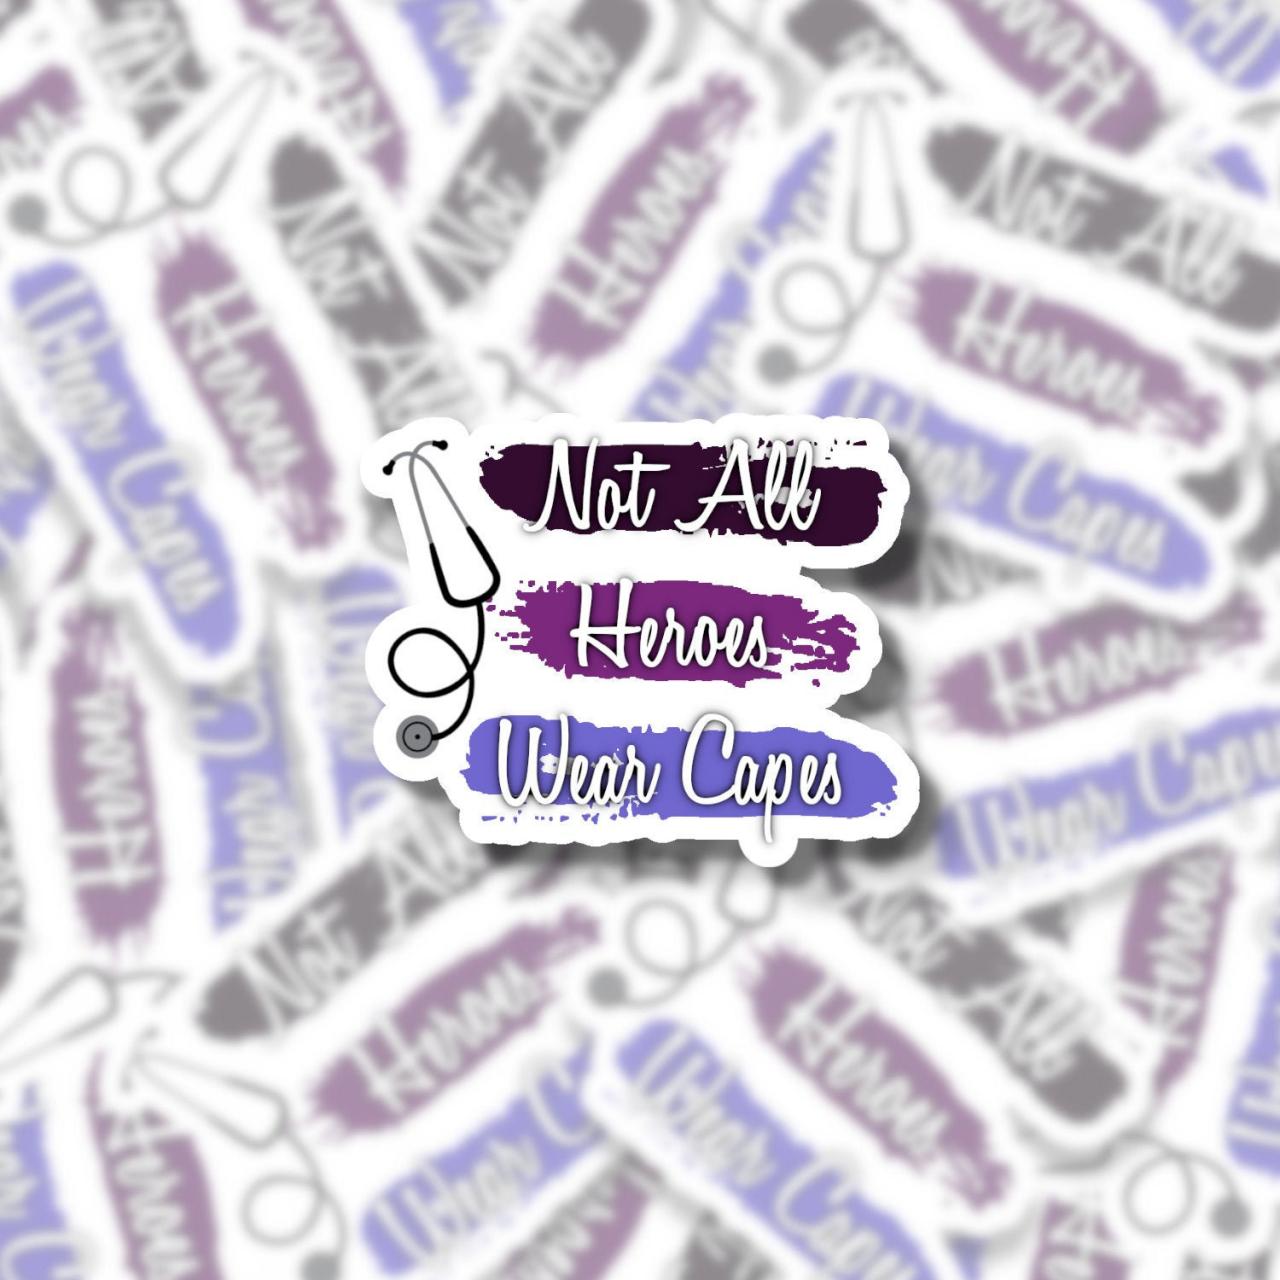 Not All Heroes Wear Capes Sticker | Nurse Sticker | Doctor Sticker | Healthcare Sticker | Medical Sticker | Laptop Sticker | Small Gift